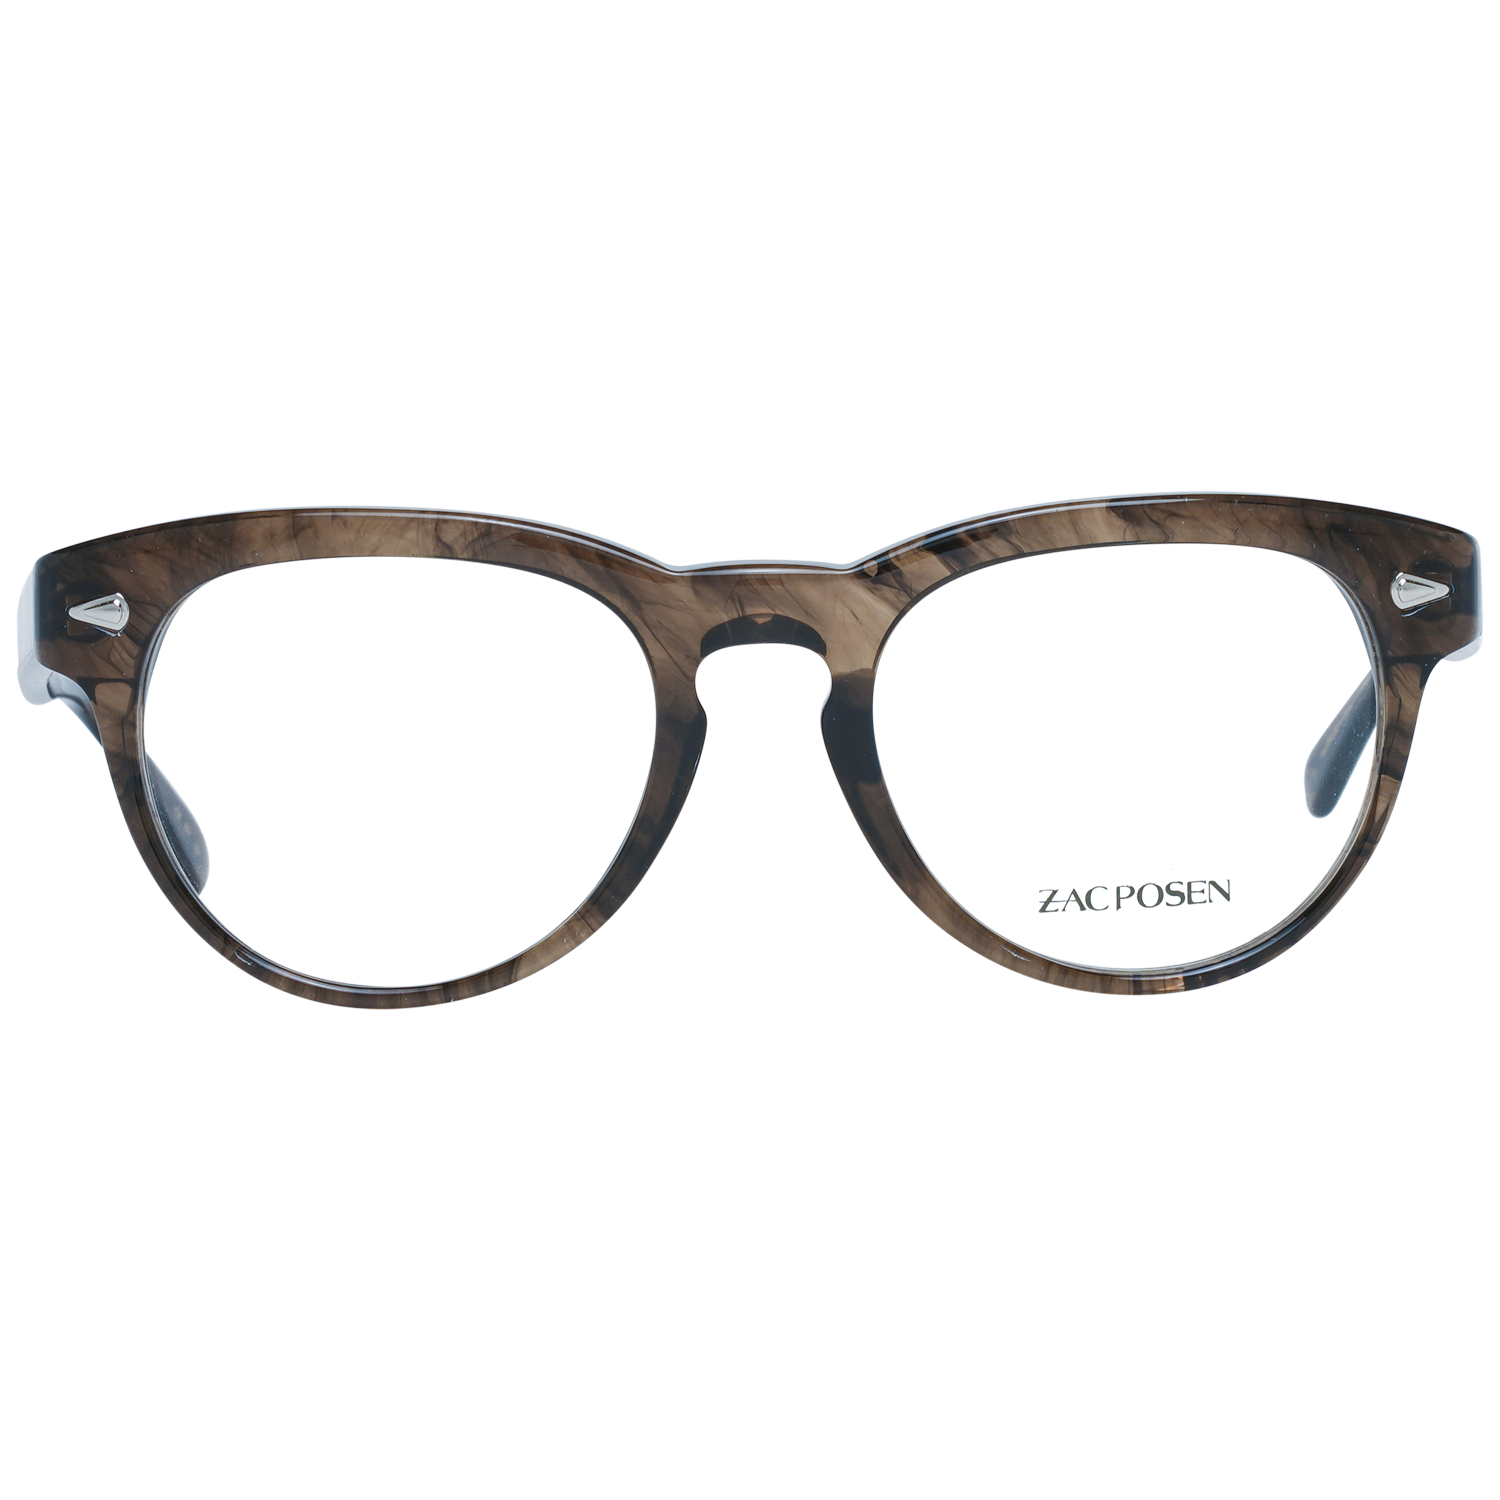 Zac Posen Frames Zac Posen Optical Frame ZSER GR 51 Serge Eyeglasses Eyewear UK USA Australia 